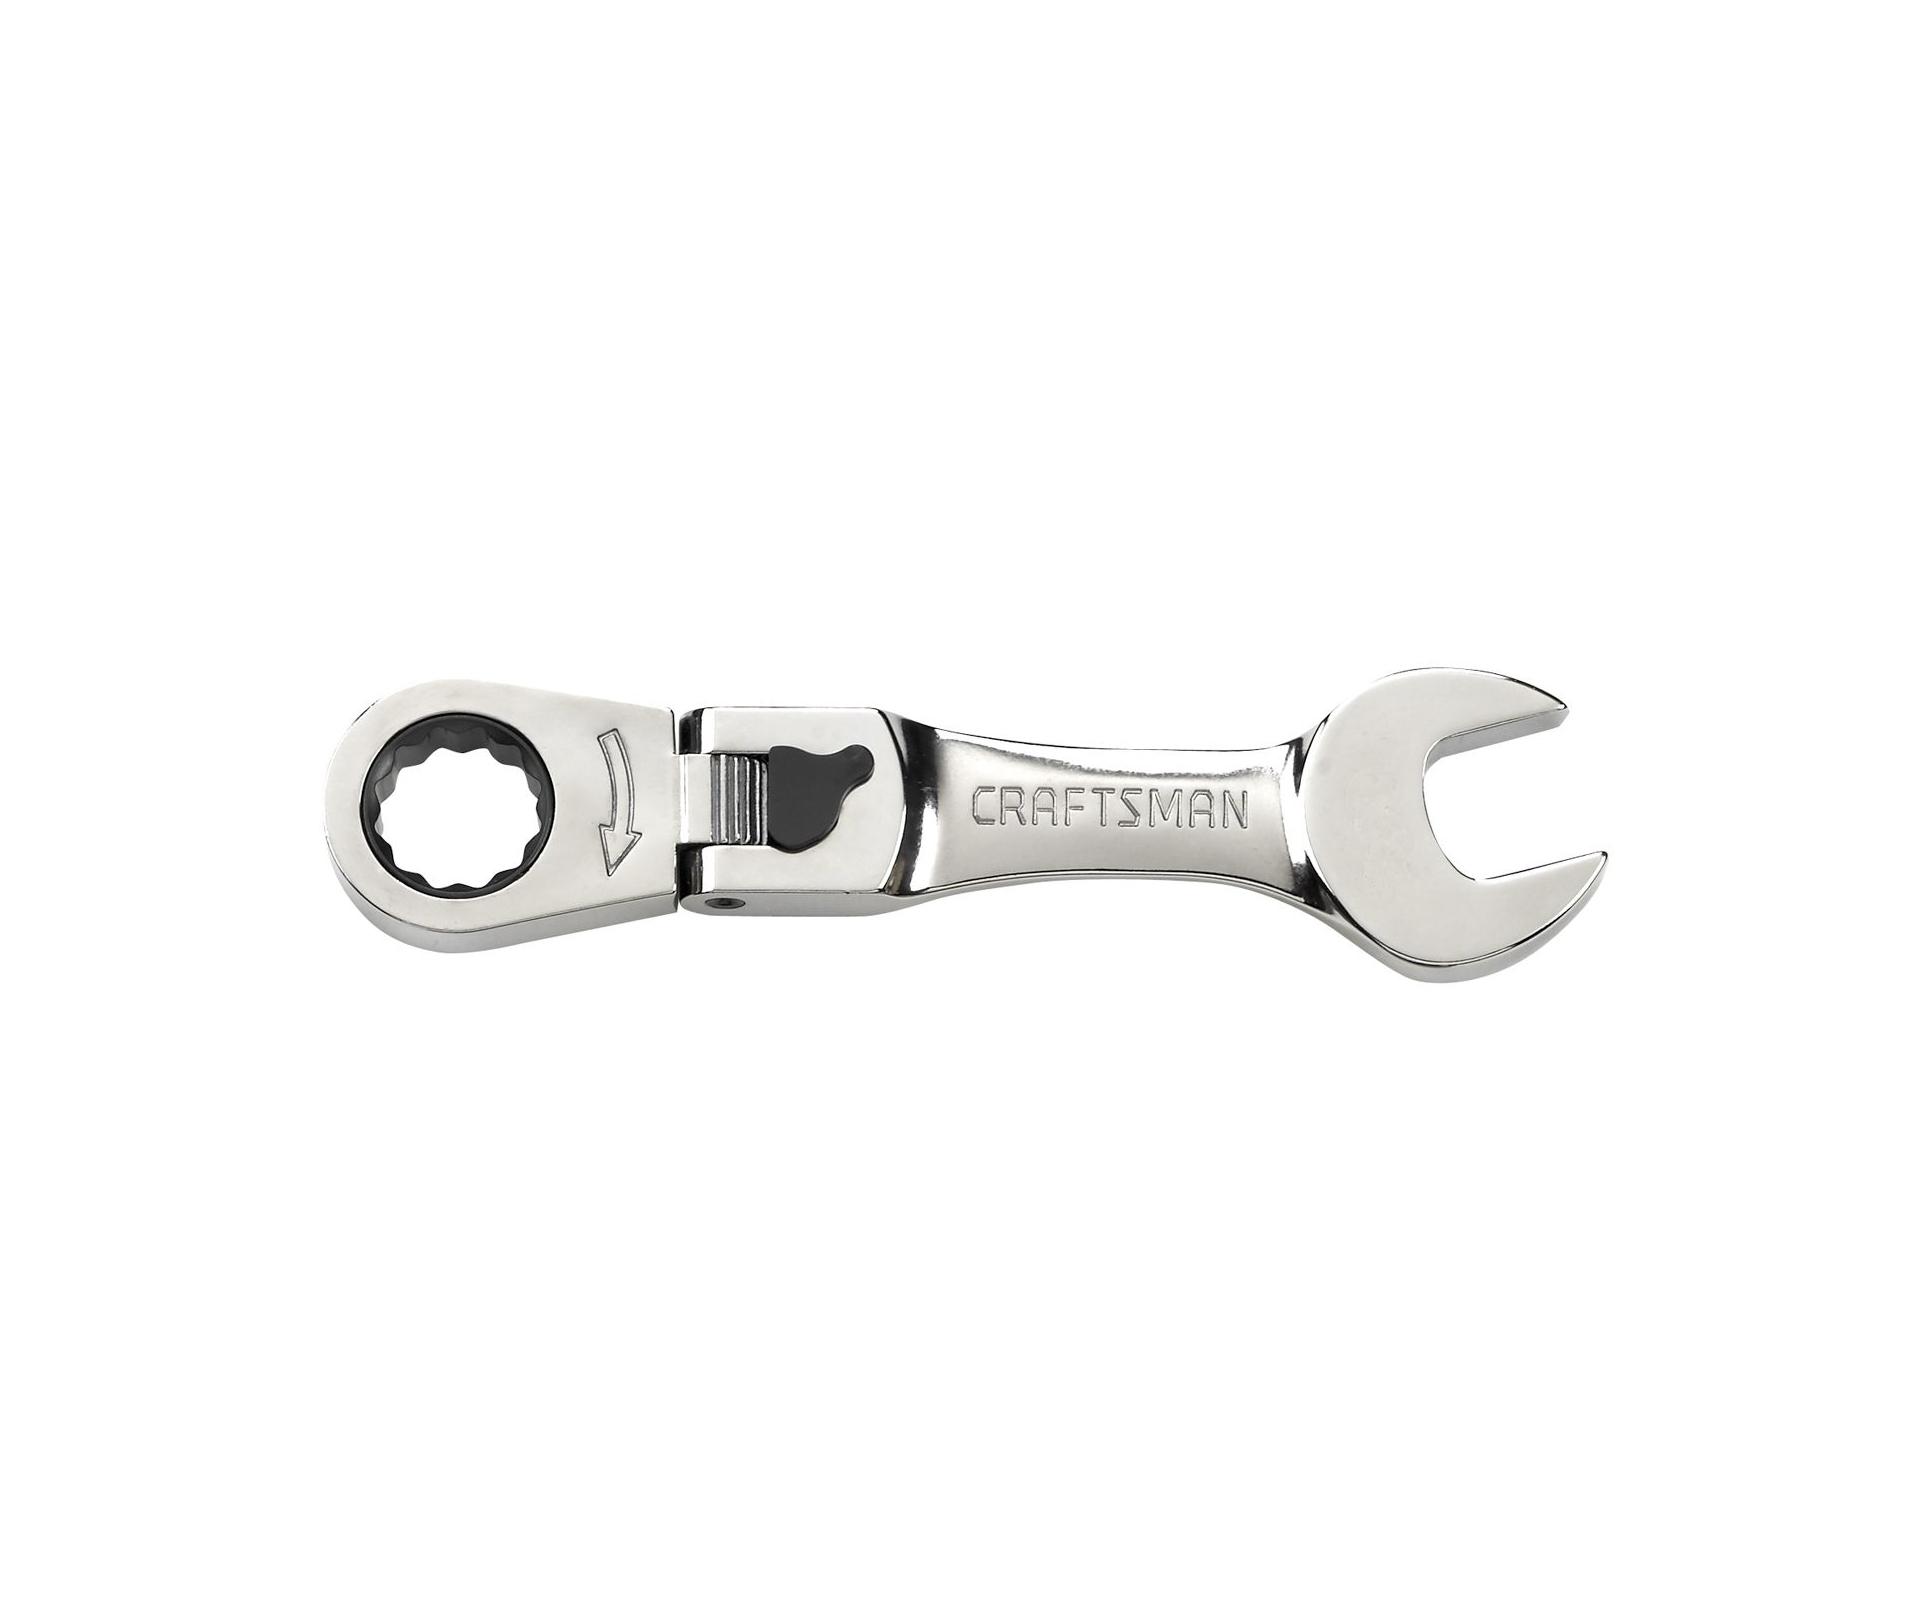 Craftsman 18mm Stubby Locking Flex Ratcheting Combination Wrench